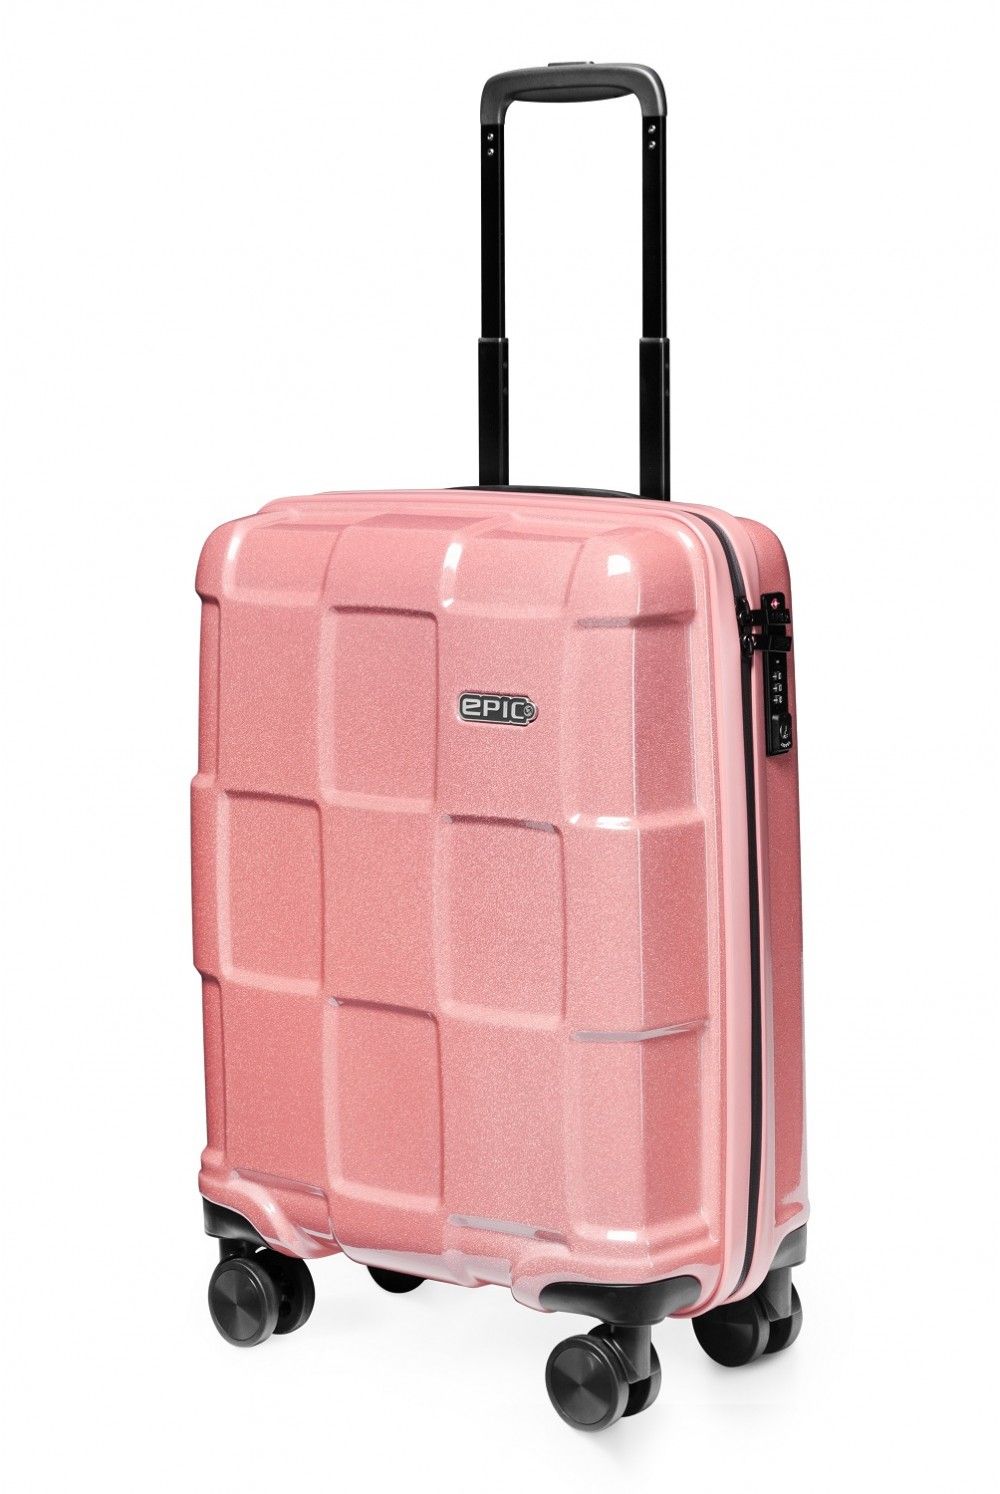 Hand luggage Epic Reflex Evo 55cm 4 wheel rose